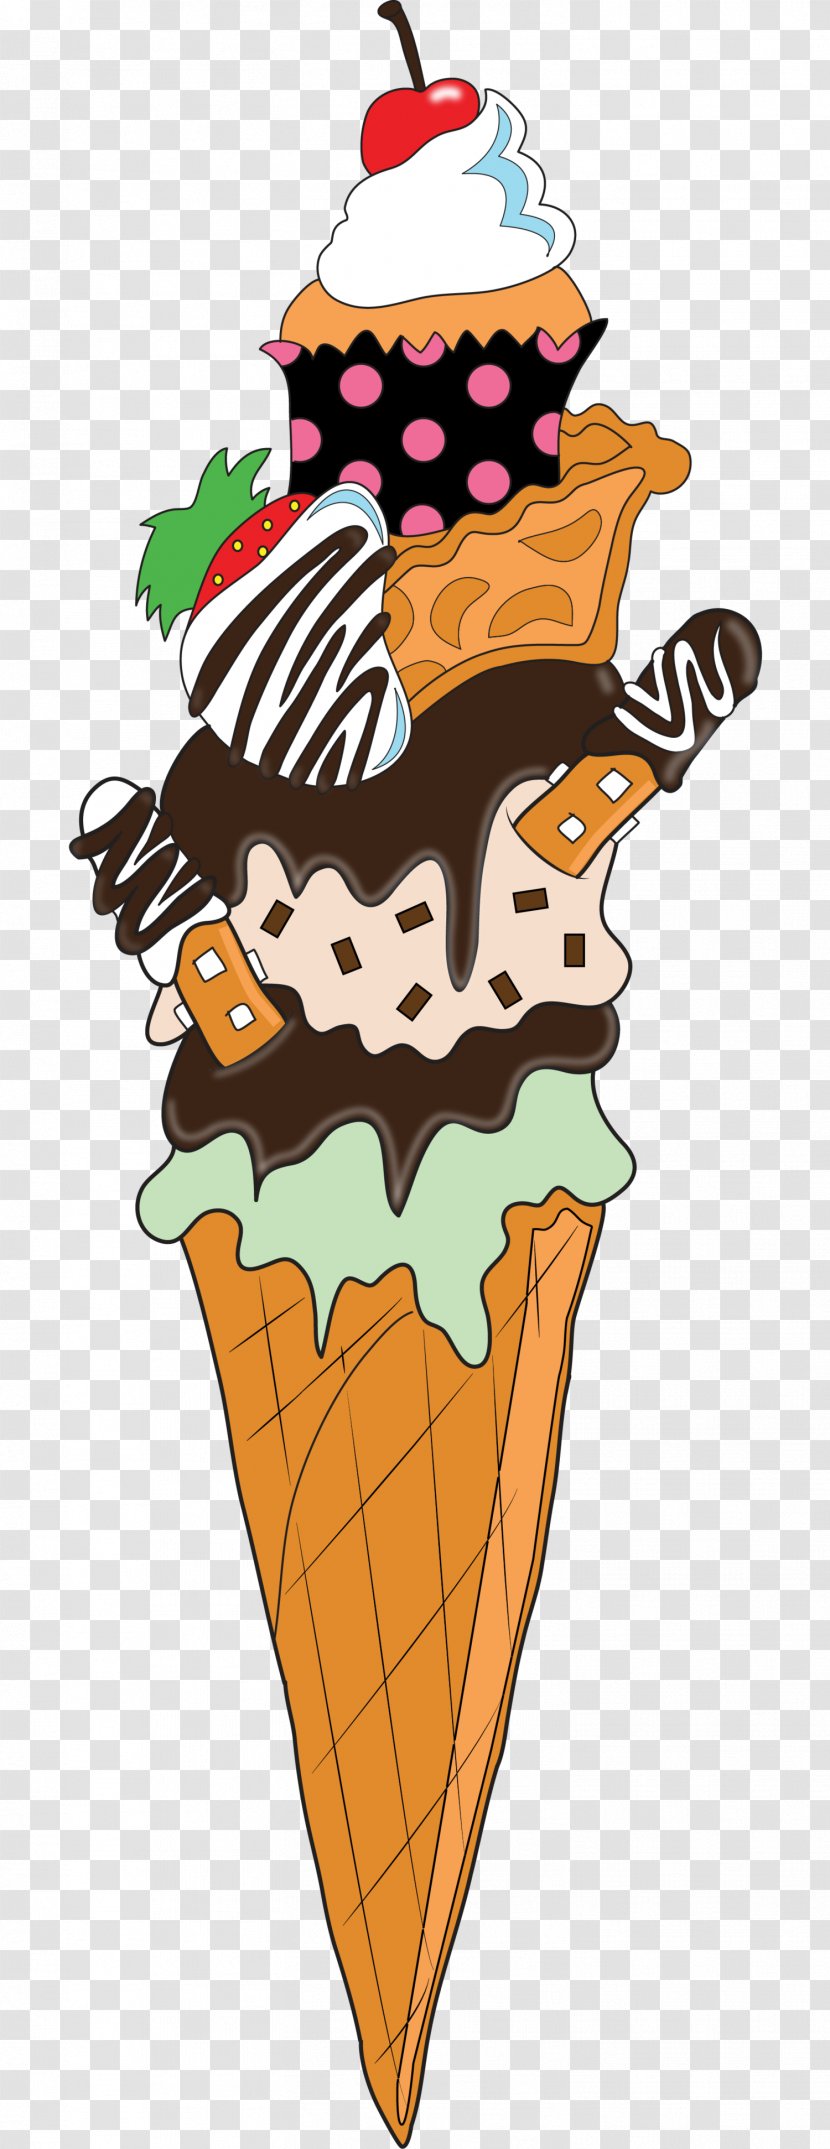 Sundae Clip Art Gift Ice Cream Cones Image - Bake Sale - Shawarma Graphic Transparent PNG